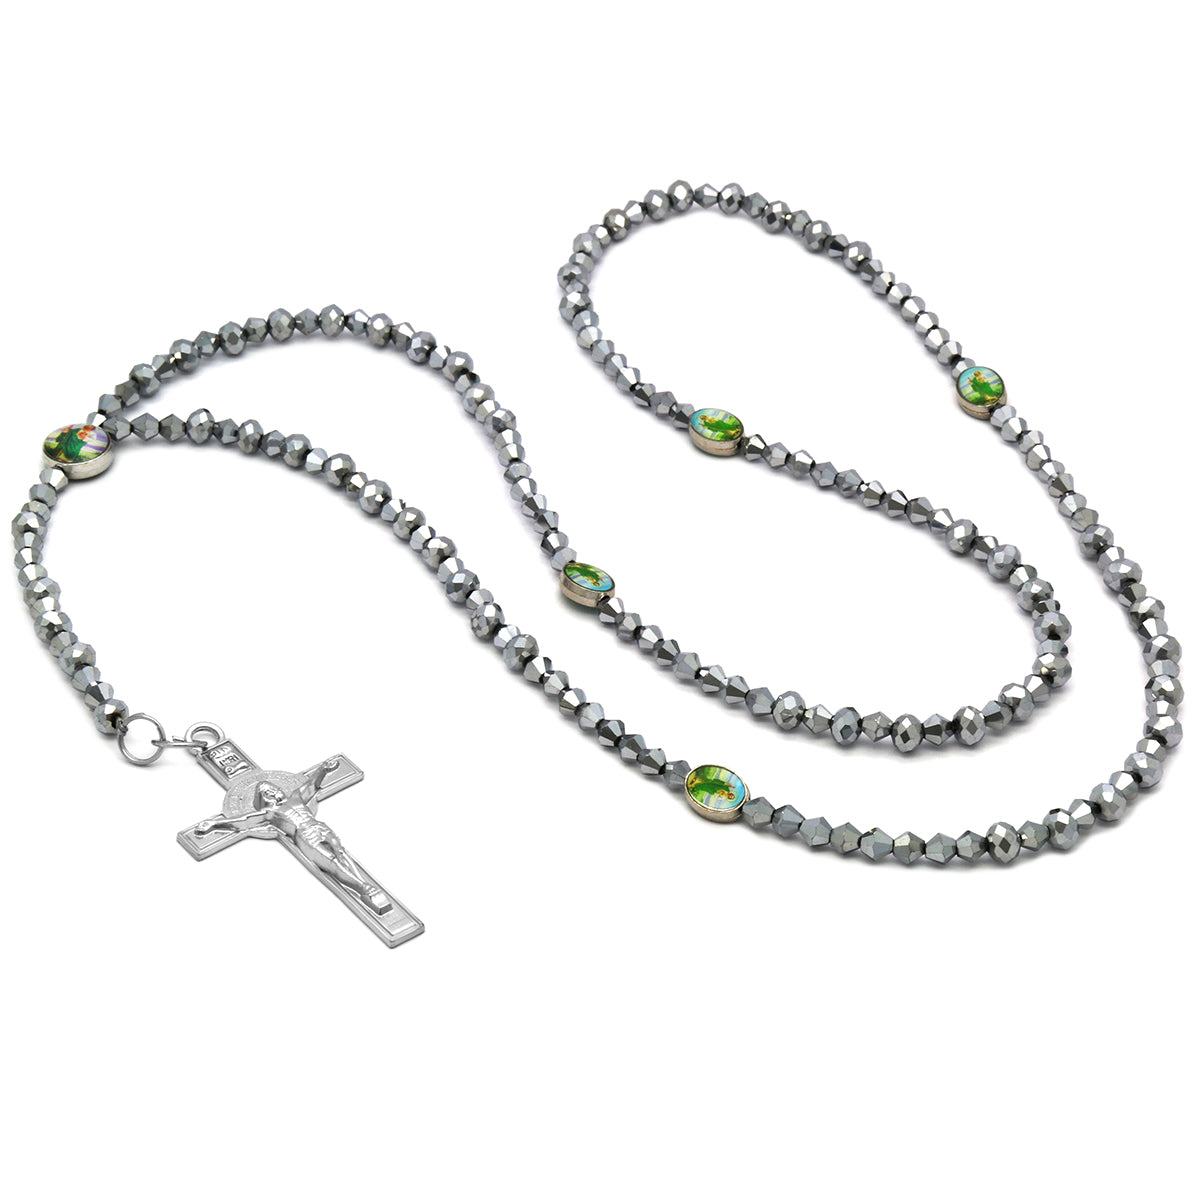 Sanjudas Epoxy Silver Crystal Rosary With Cross Pendant